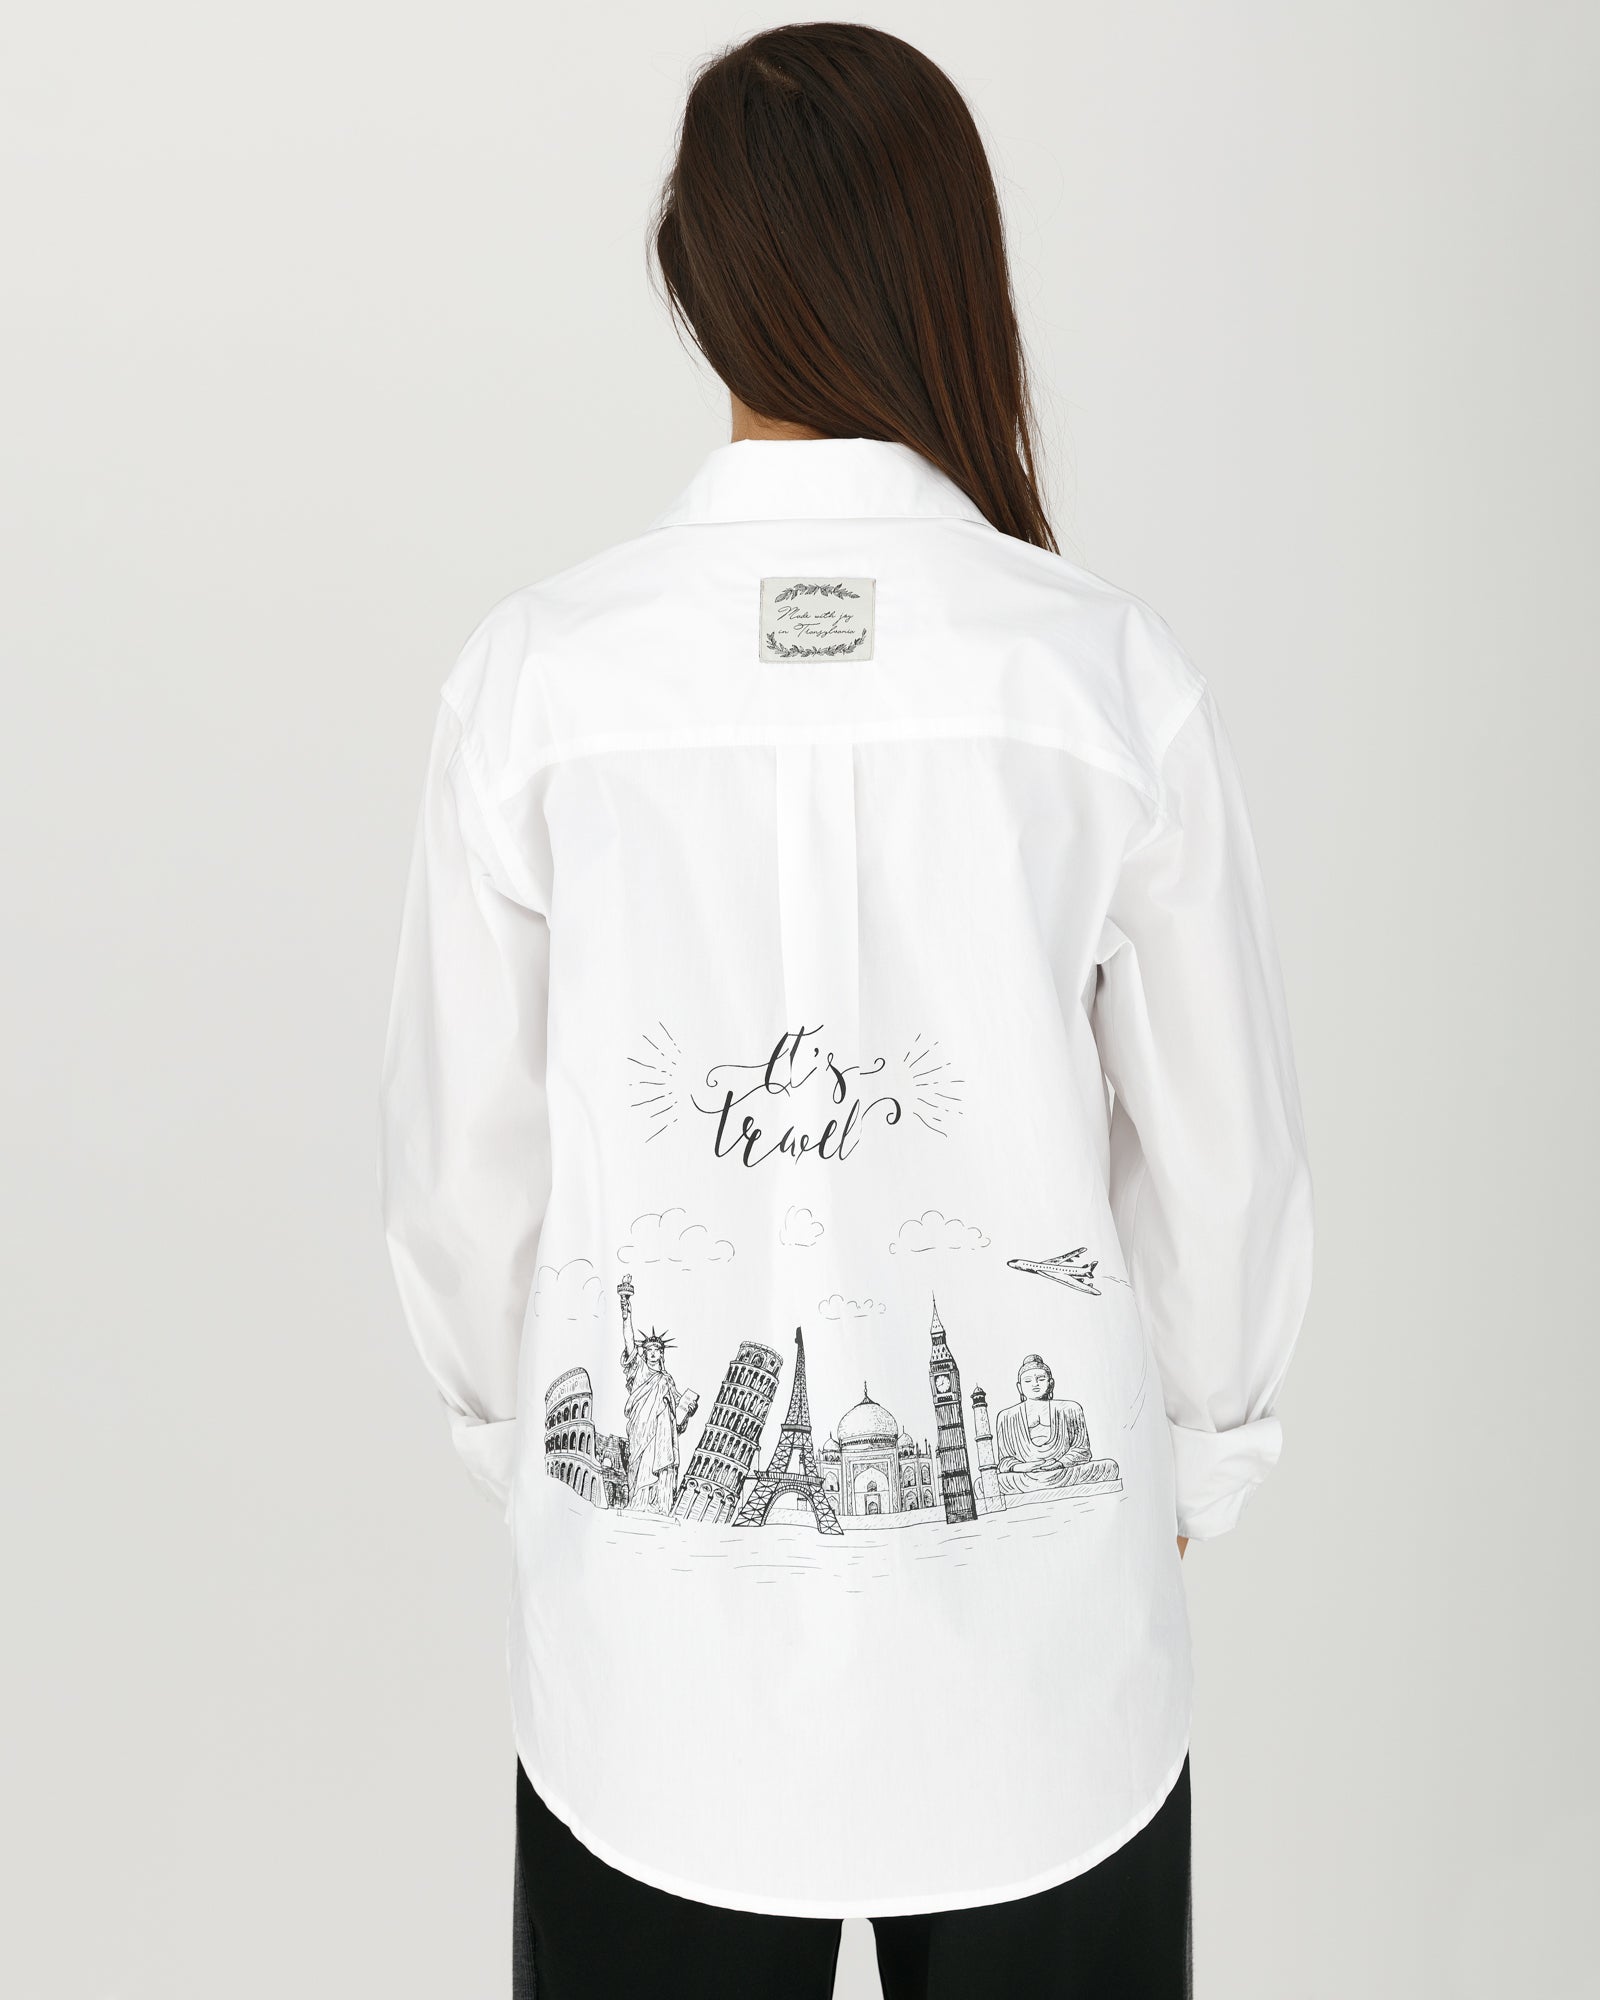 Prince shirt "Let's travel" travel motif